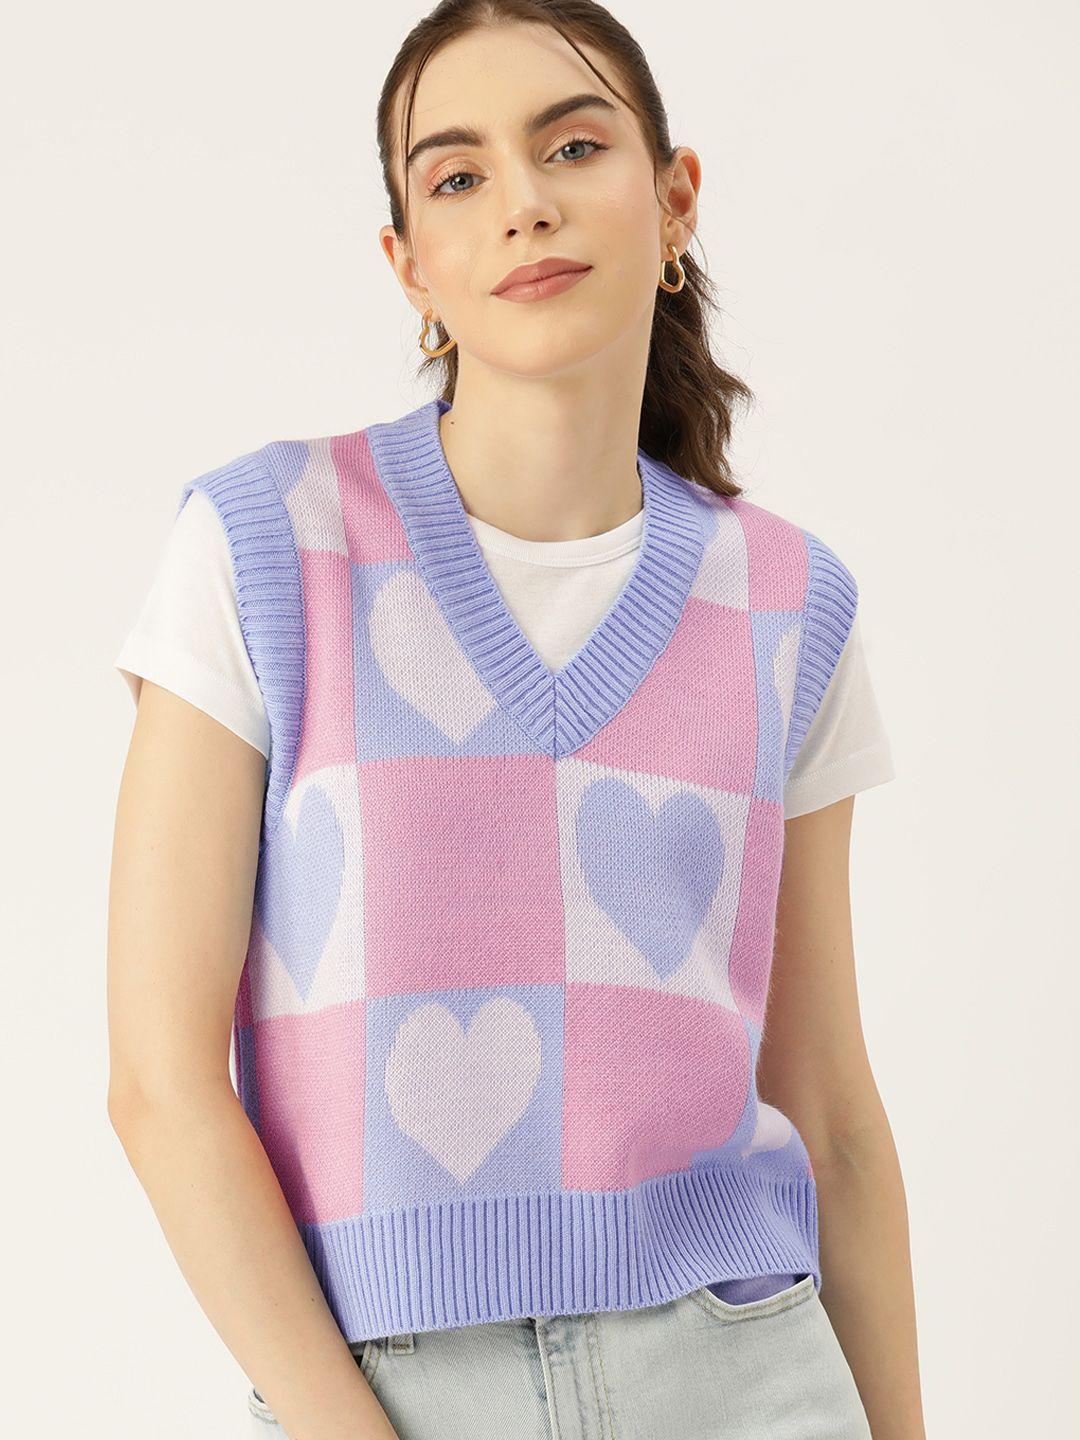 dressberry-women-conversational-checked-acrylic-sweater-vest